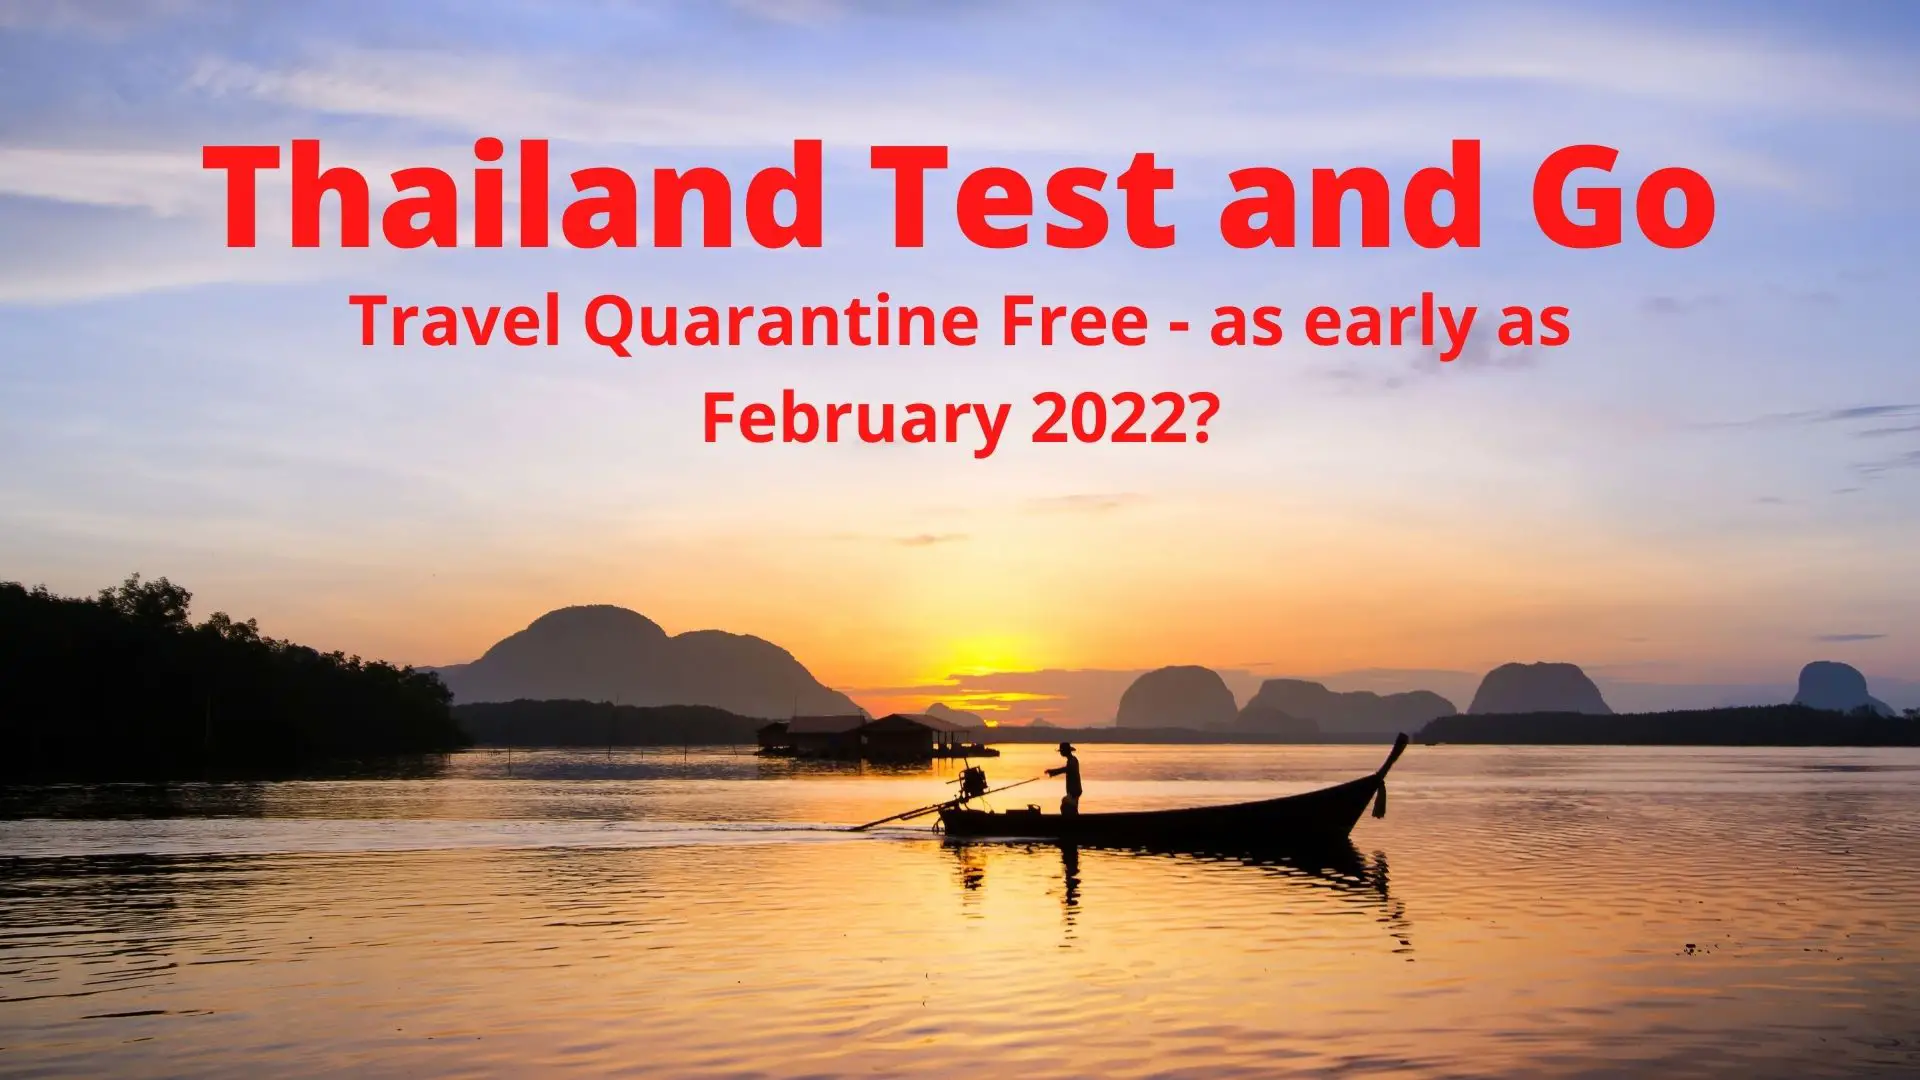 Thailand Test and Go